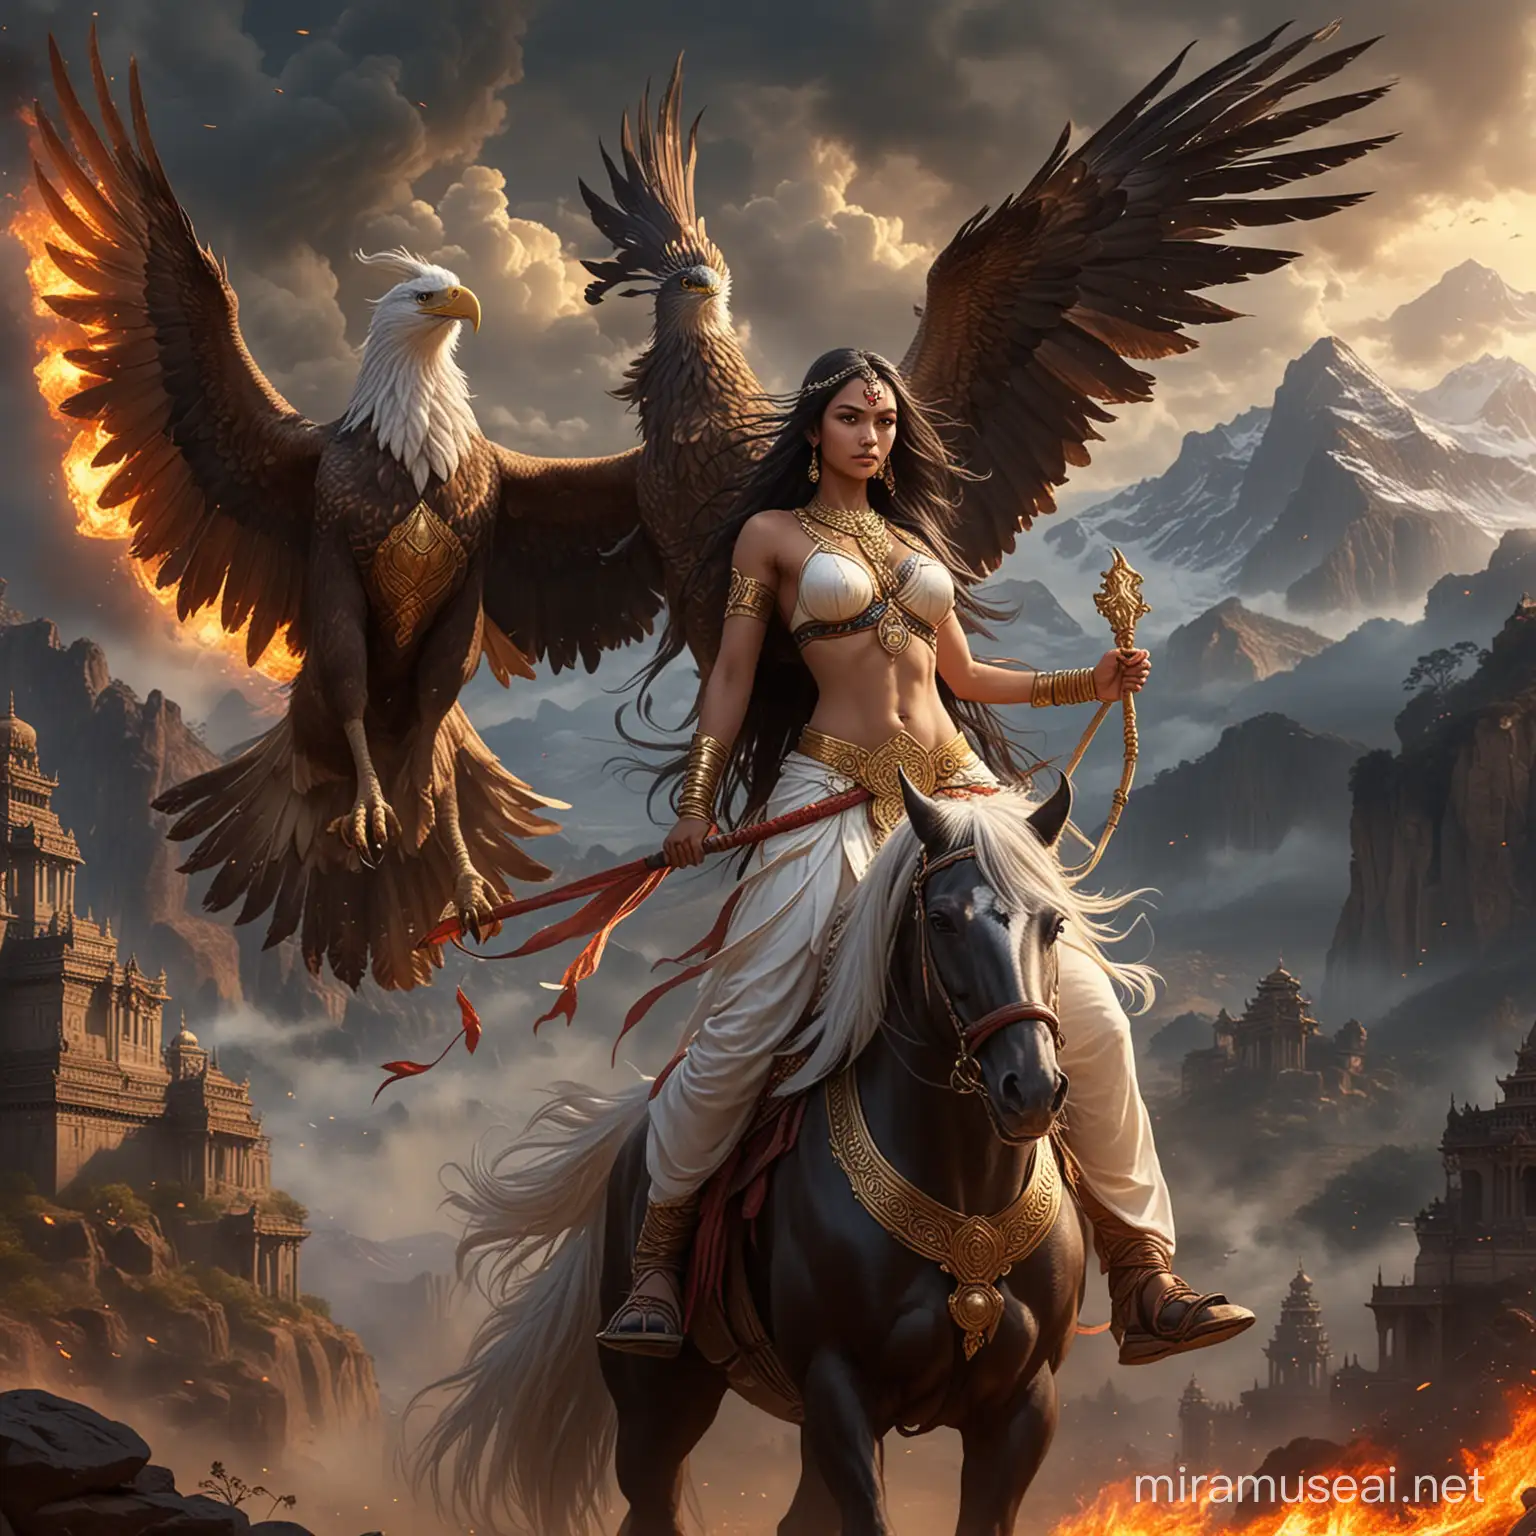 Majestic Hindu Empress Goddess in Fiery Battle with Demons